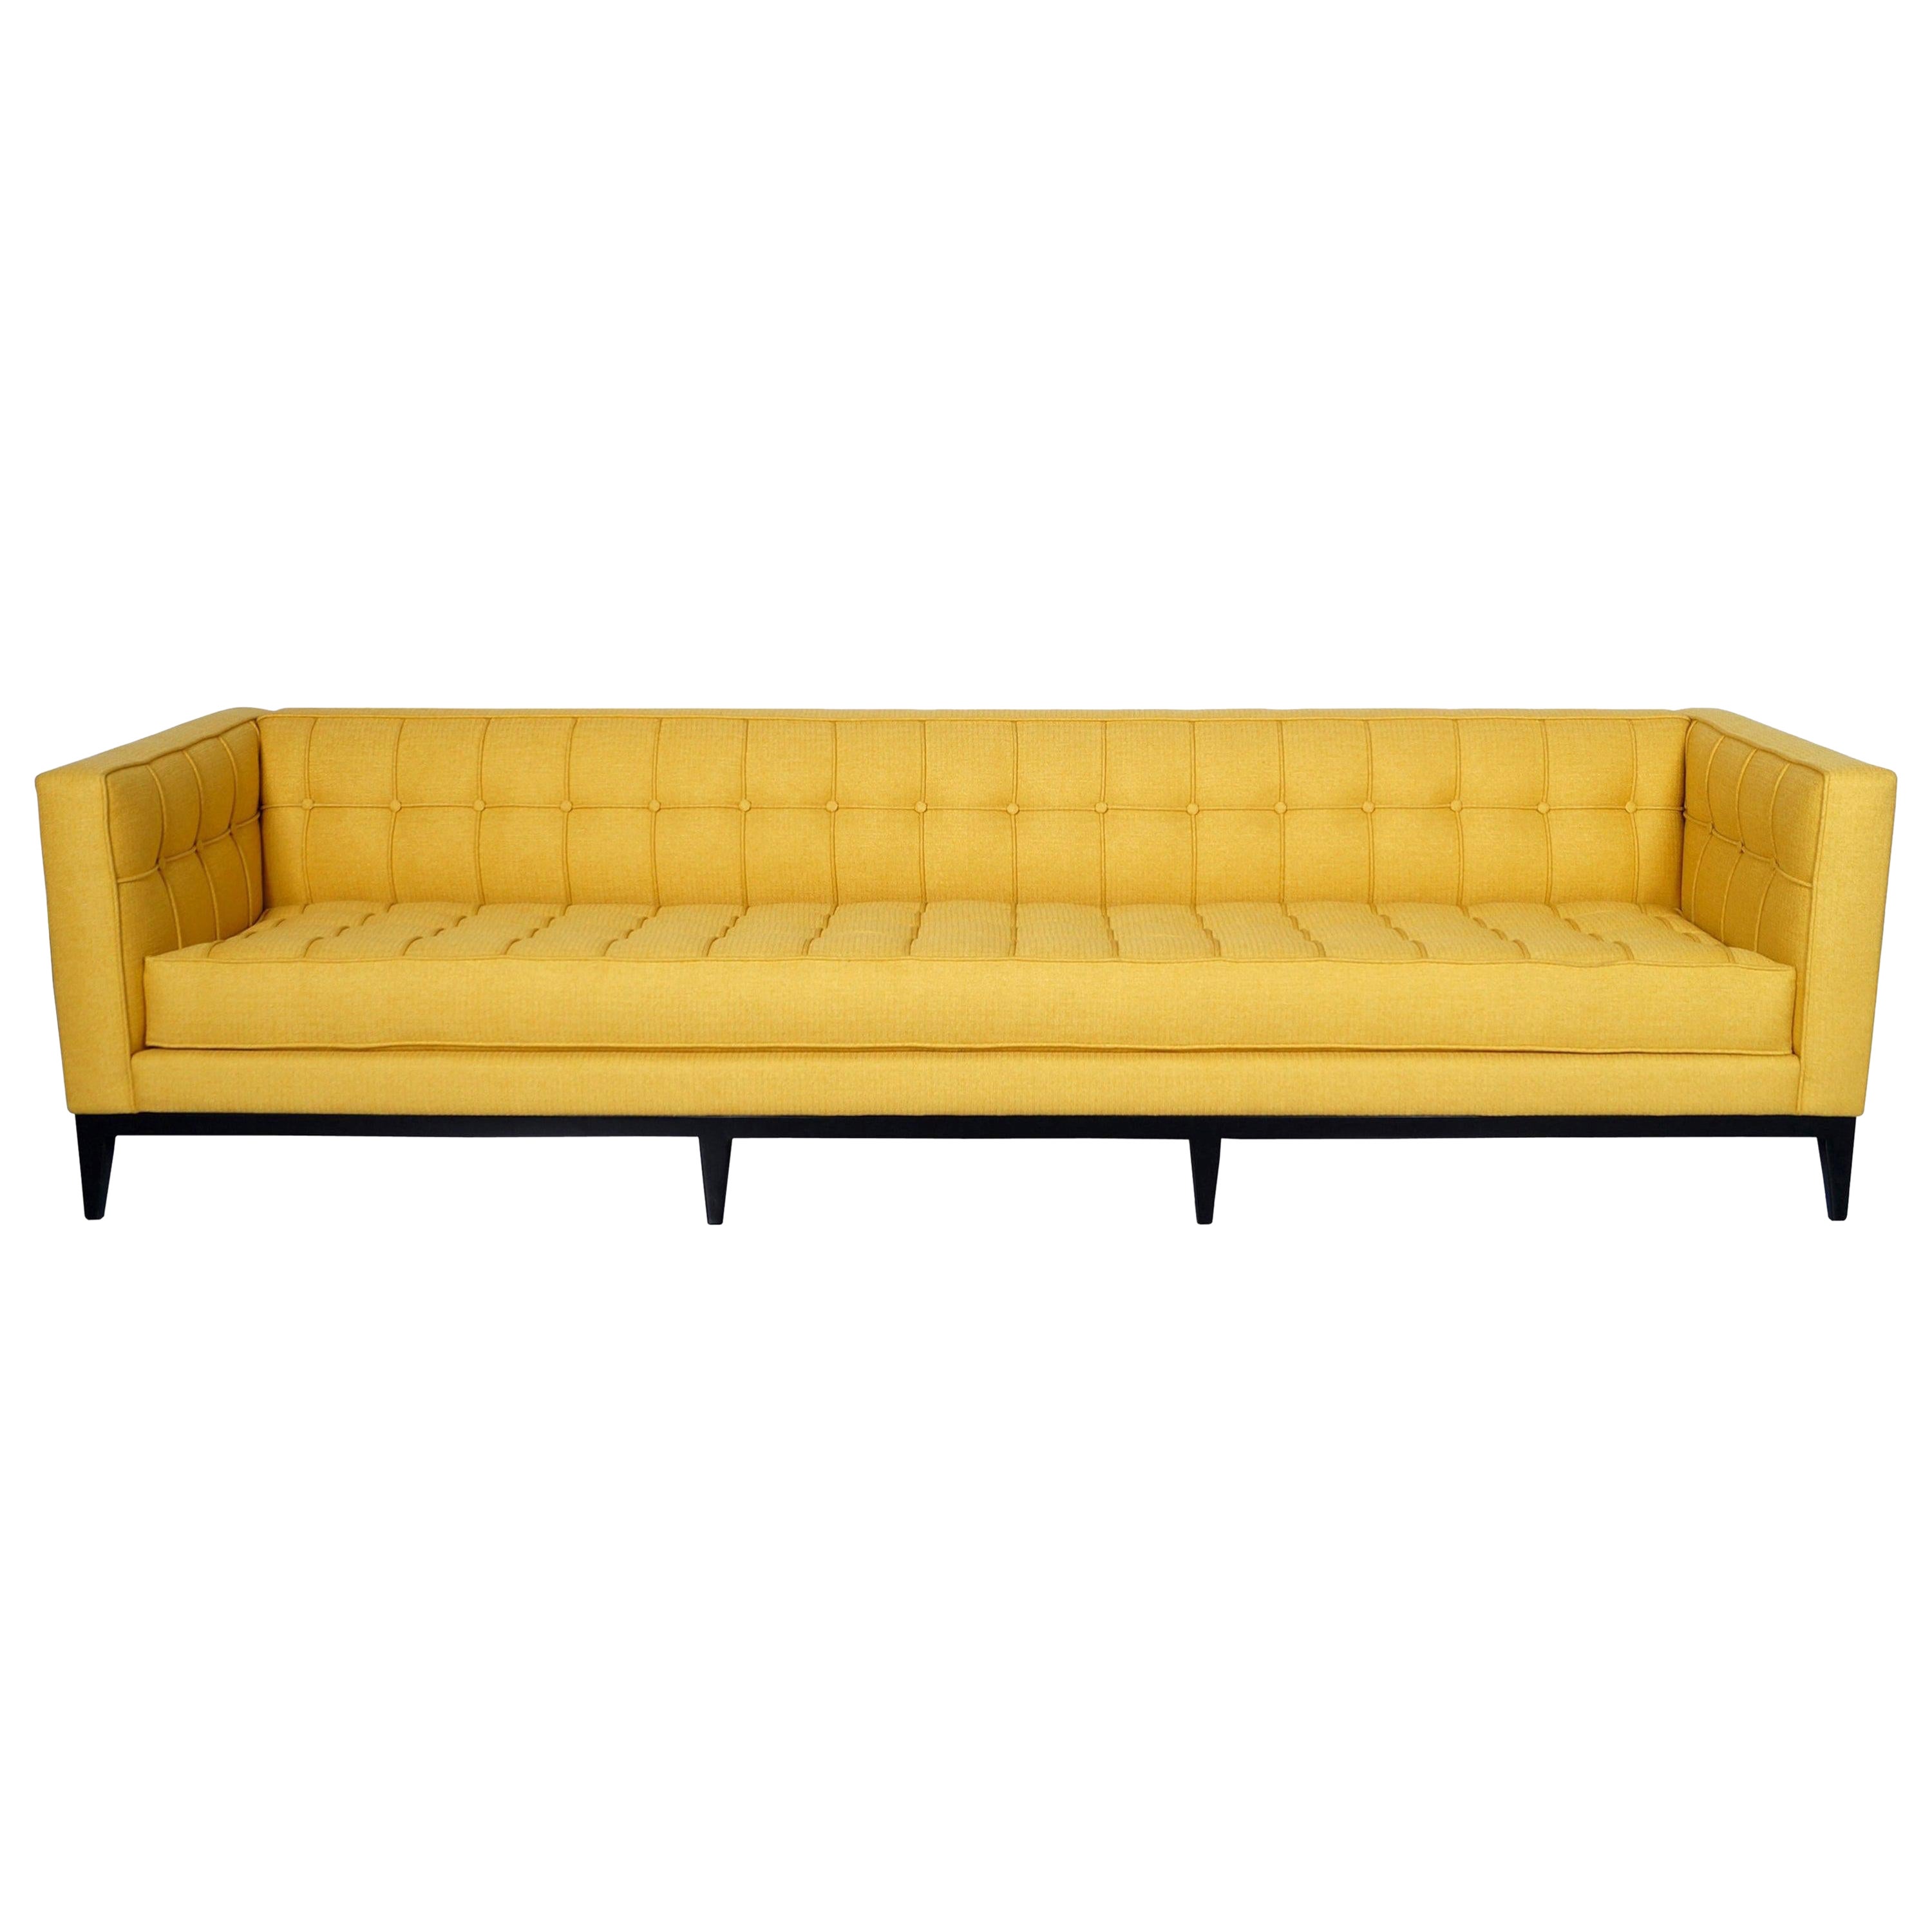 Elegant Tufted "Vista" Sofa by Cruz Design Studio For Sale